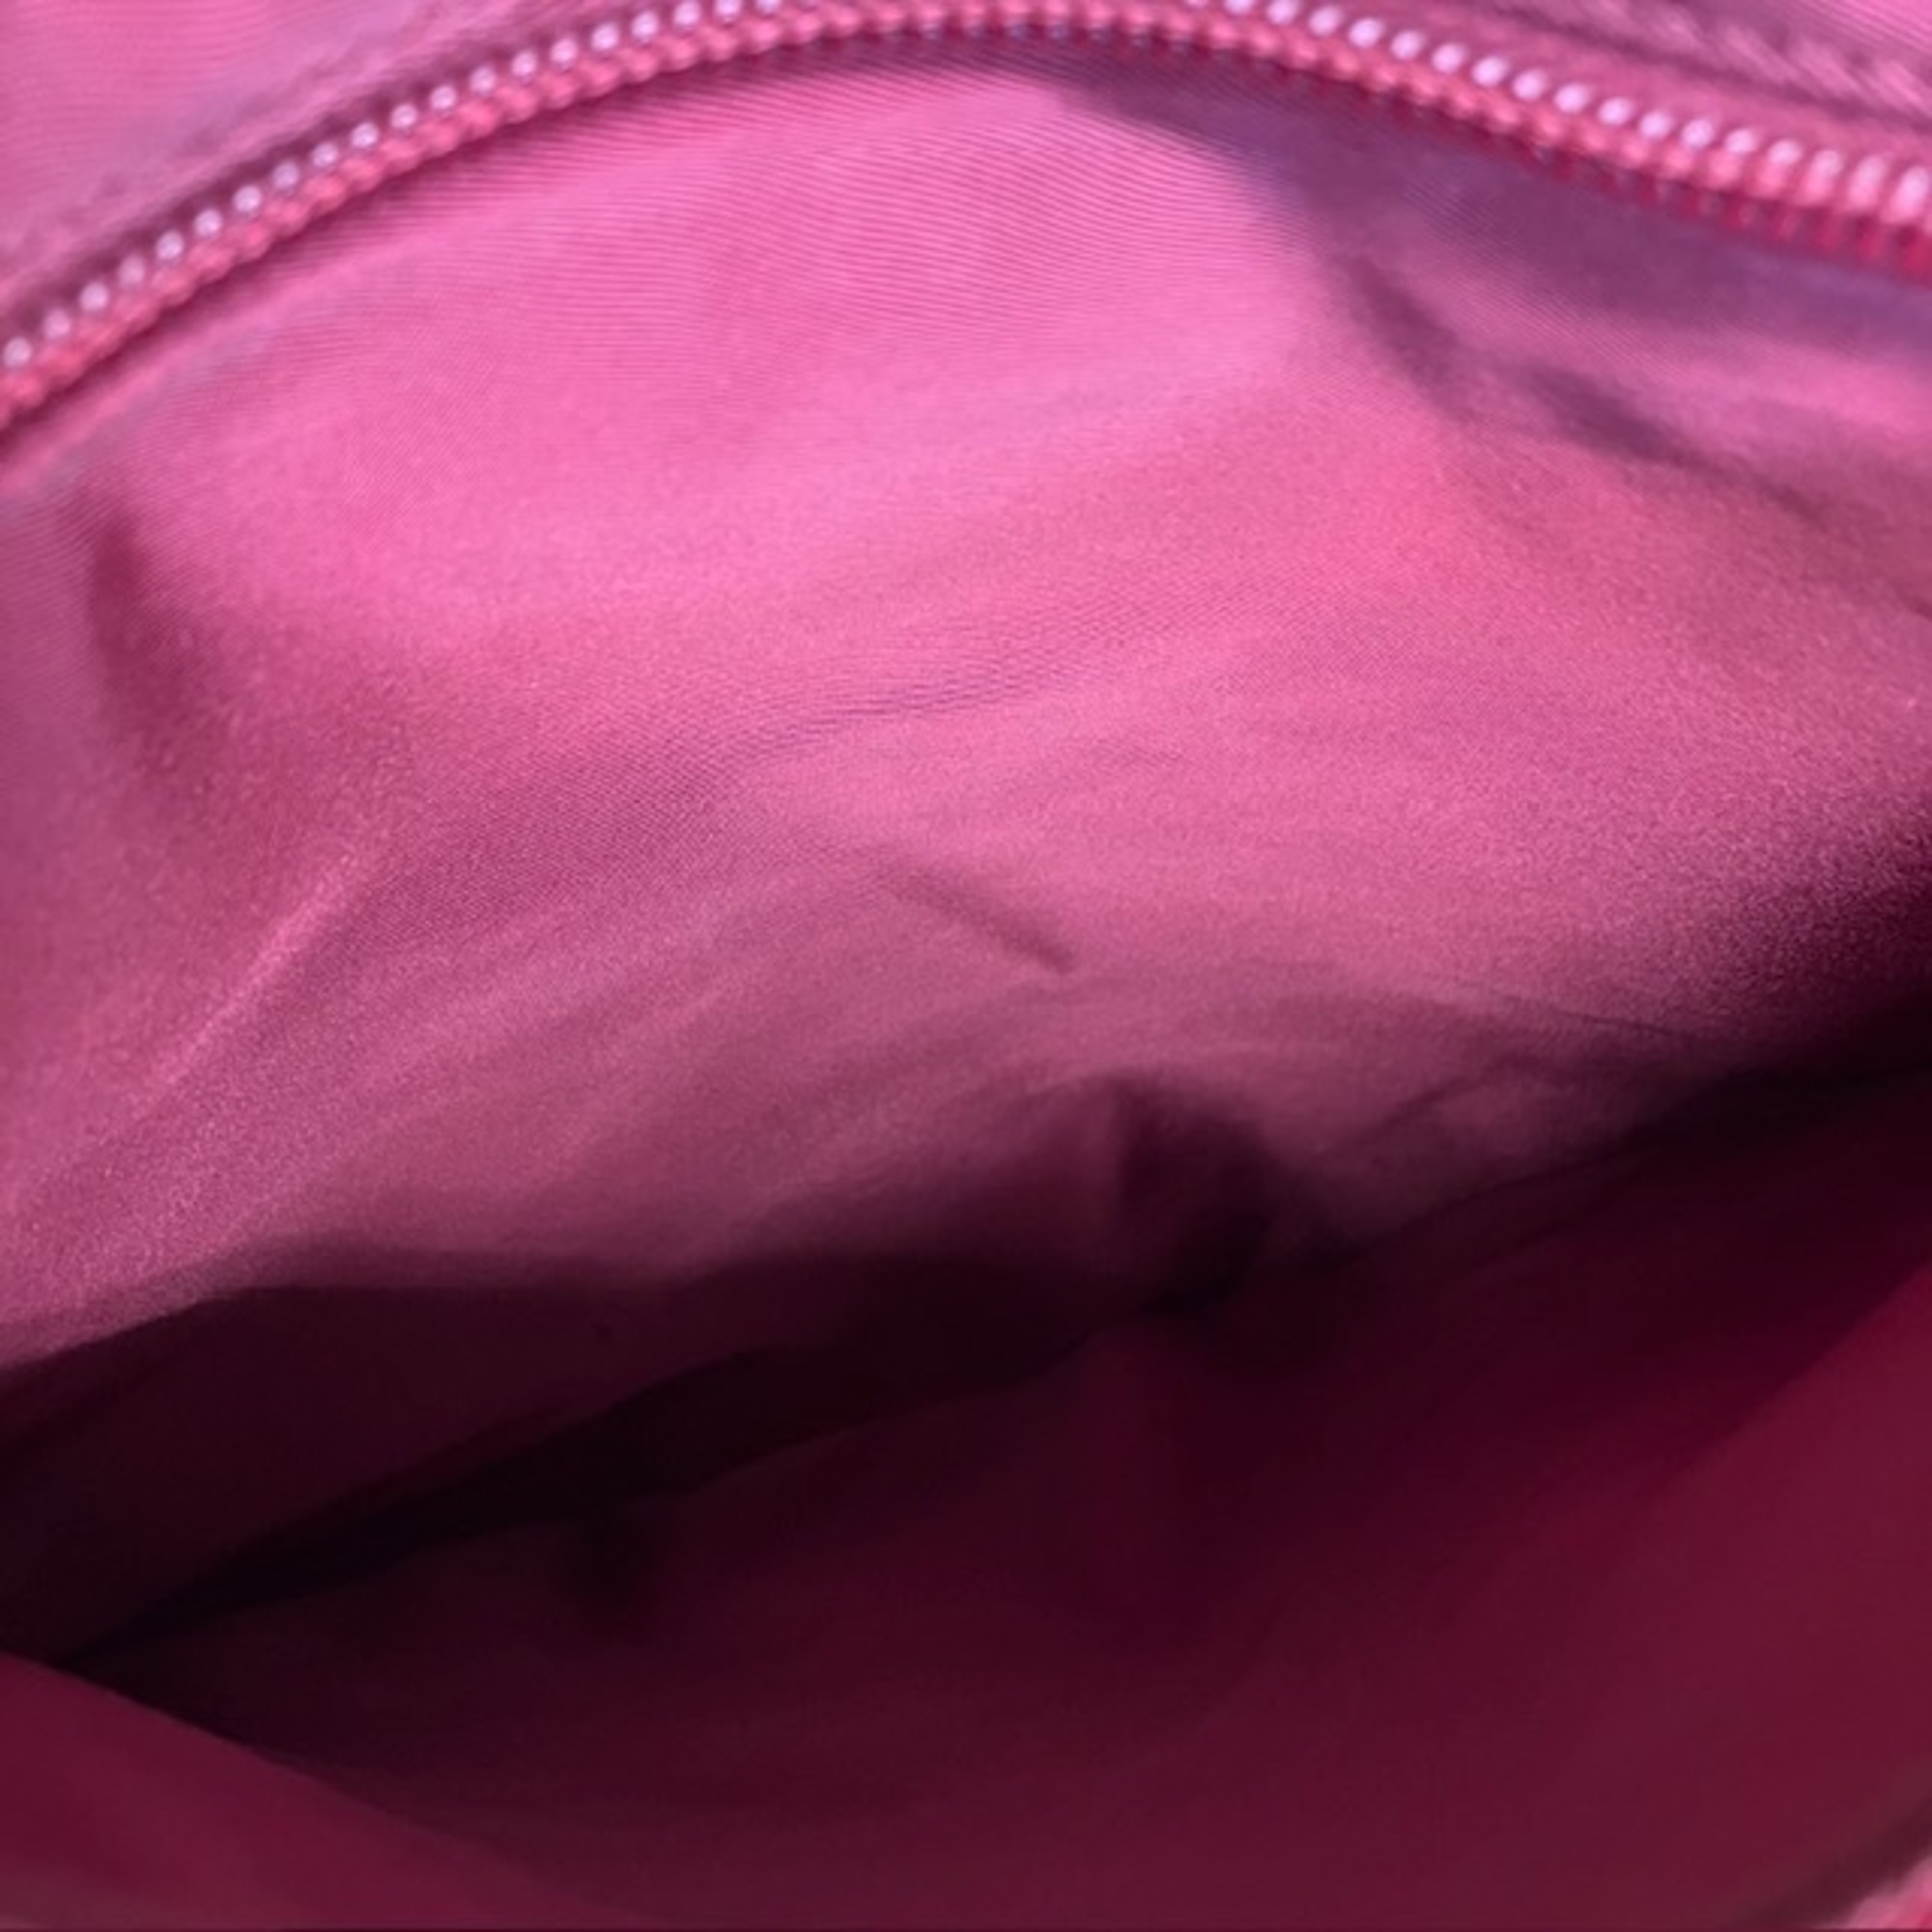 PRADA Prada tote bag shoulder nylon triangle logo red ladies men's fashion USED